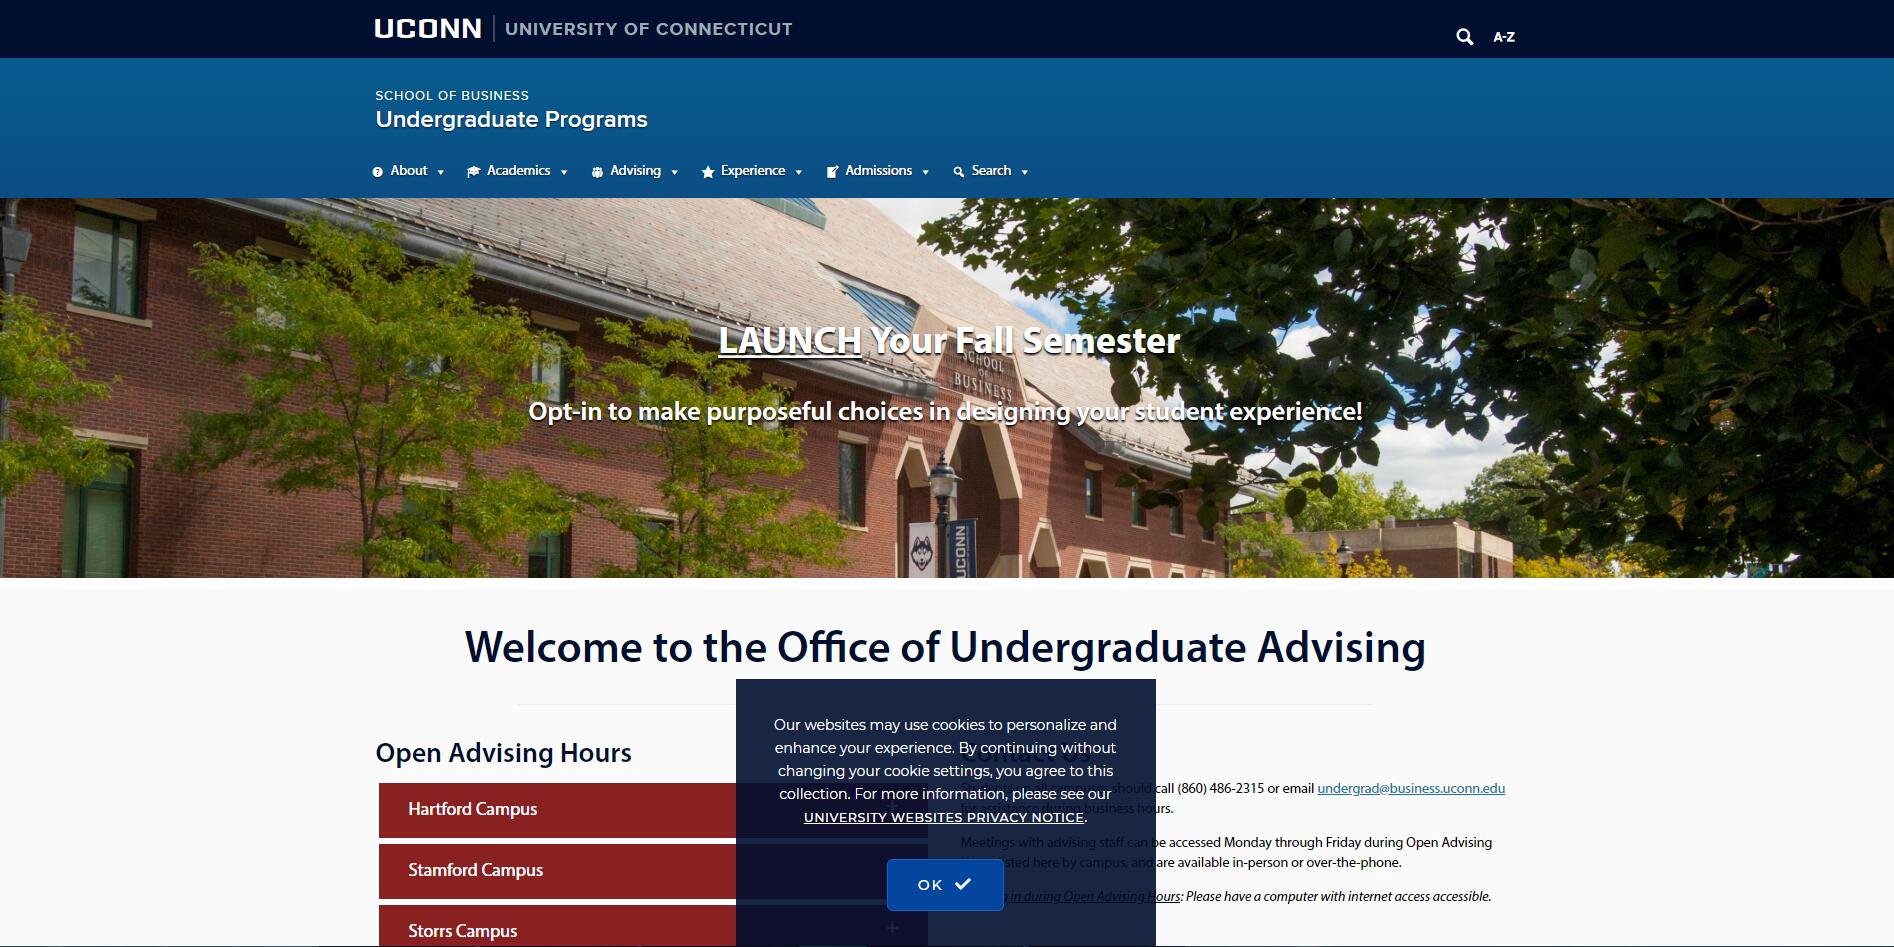 University of Connecticut Undergraduate Business